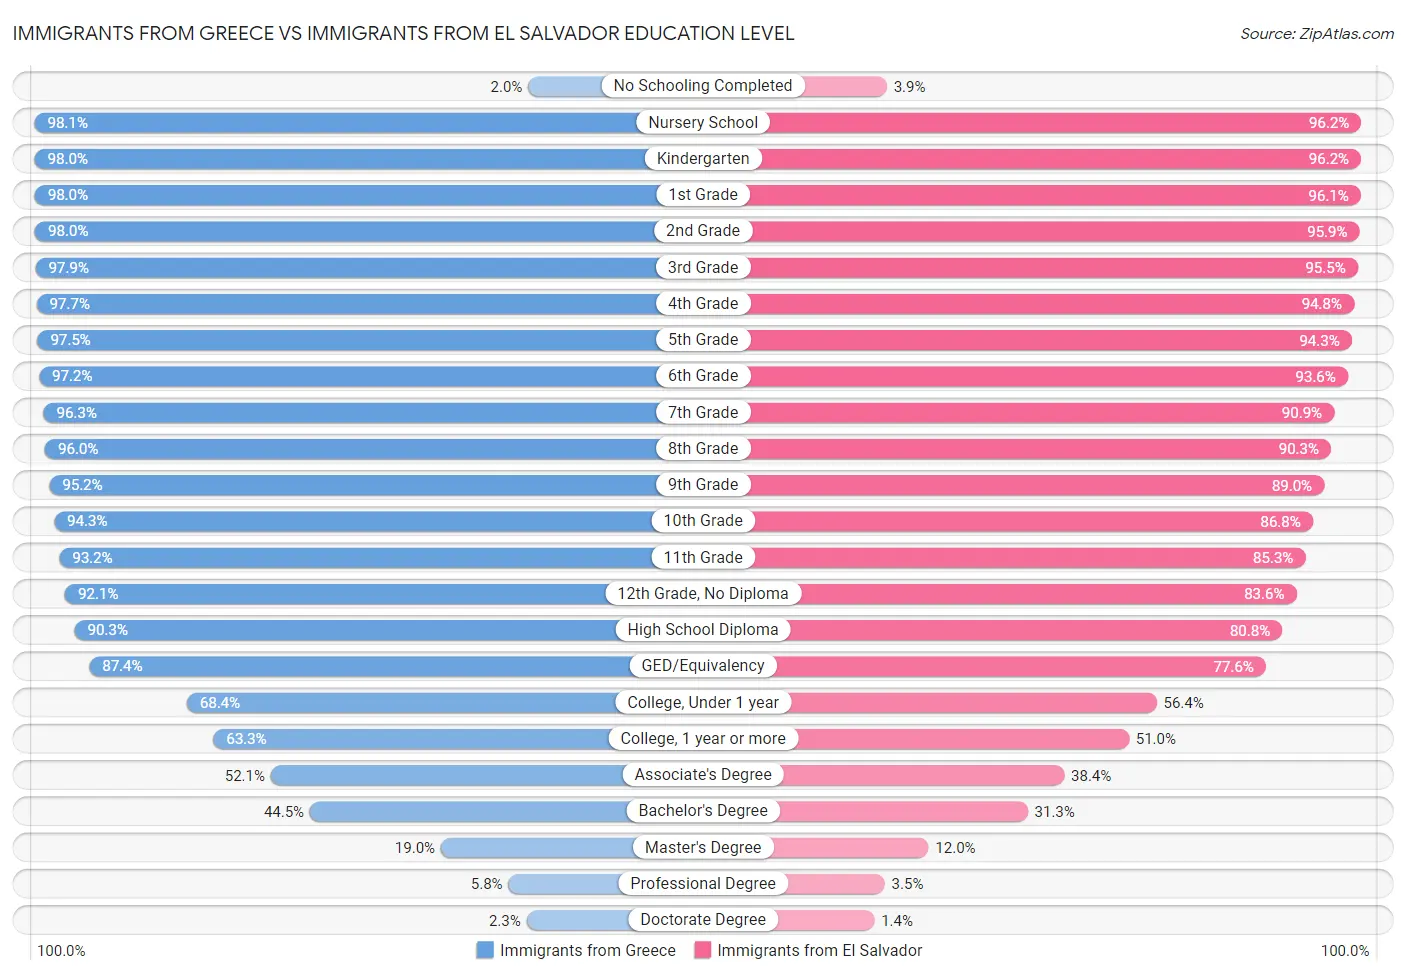 Immigrants from Greece vs Immigrants from El Salvador Education Level